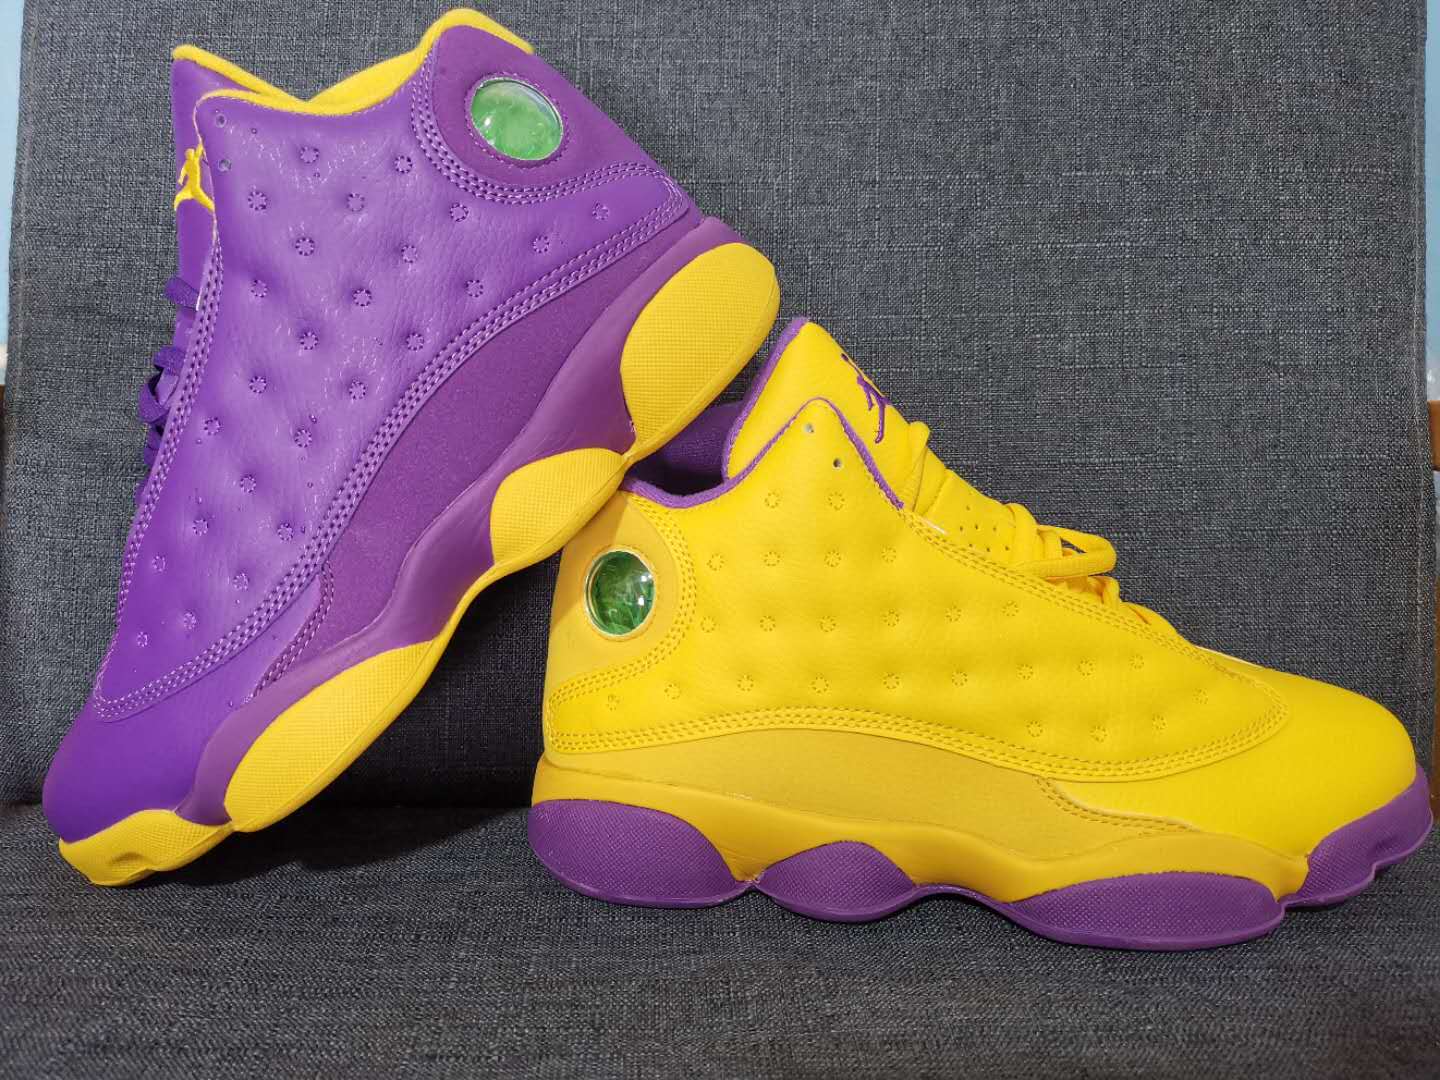 purple and yellow jordans 13